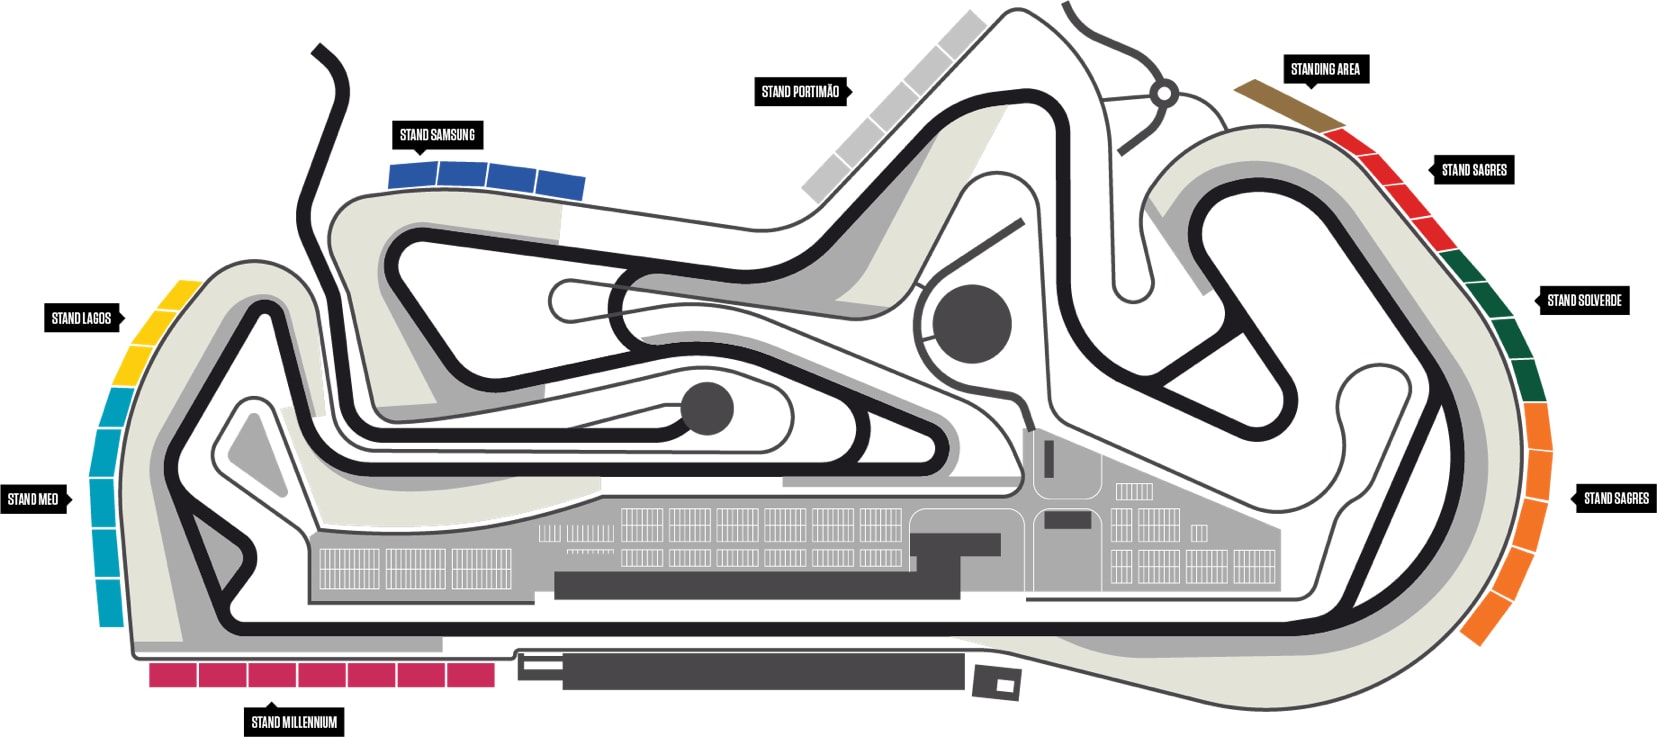 Racing Track - The Motor Park - Autodromo do Algarve